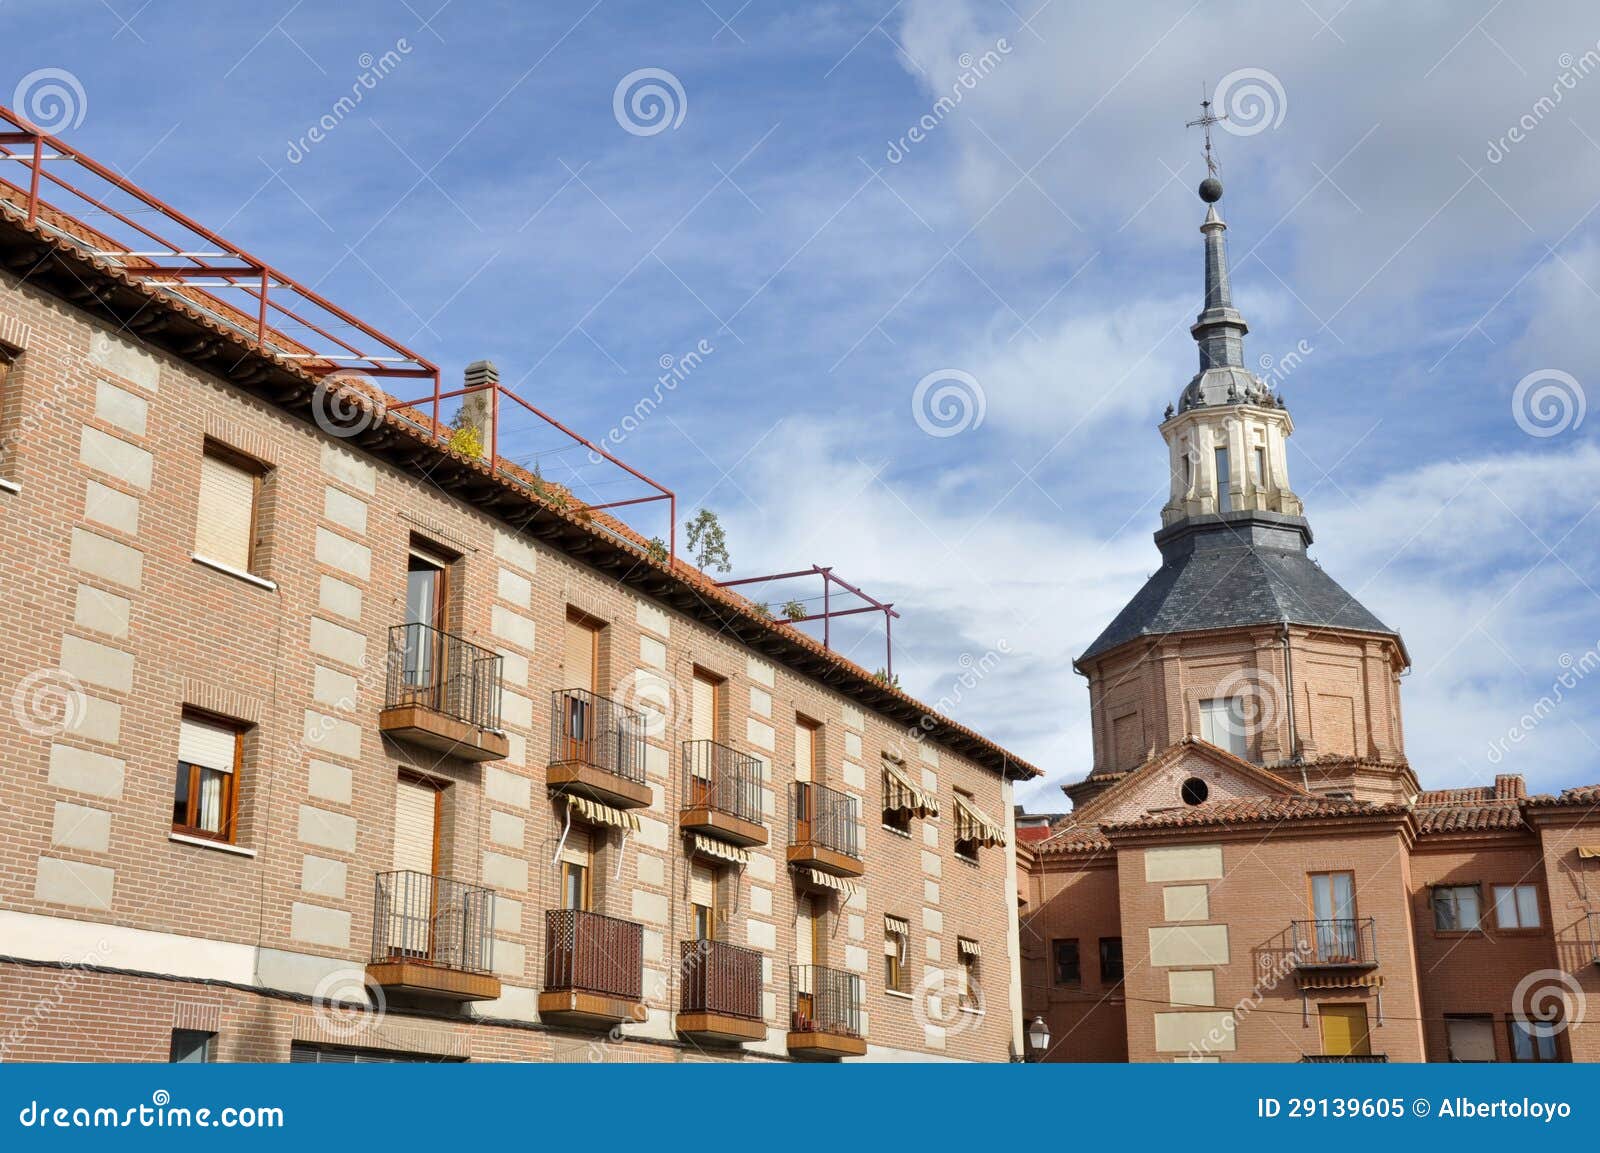 downtown of alcala de henares, madrid (spain)